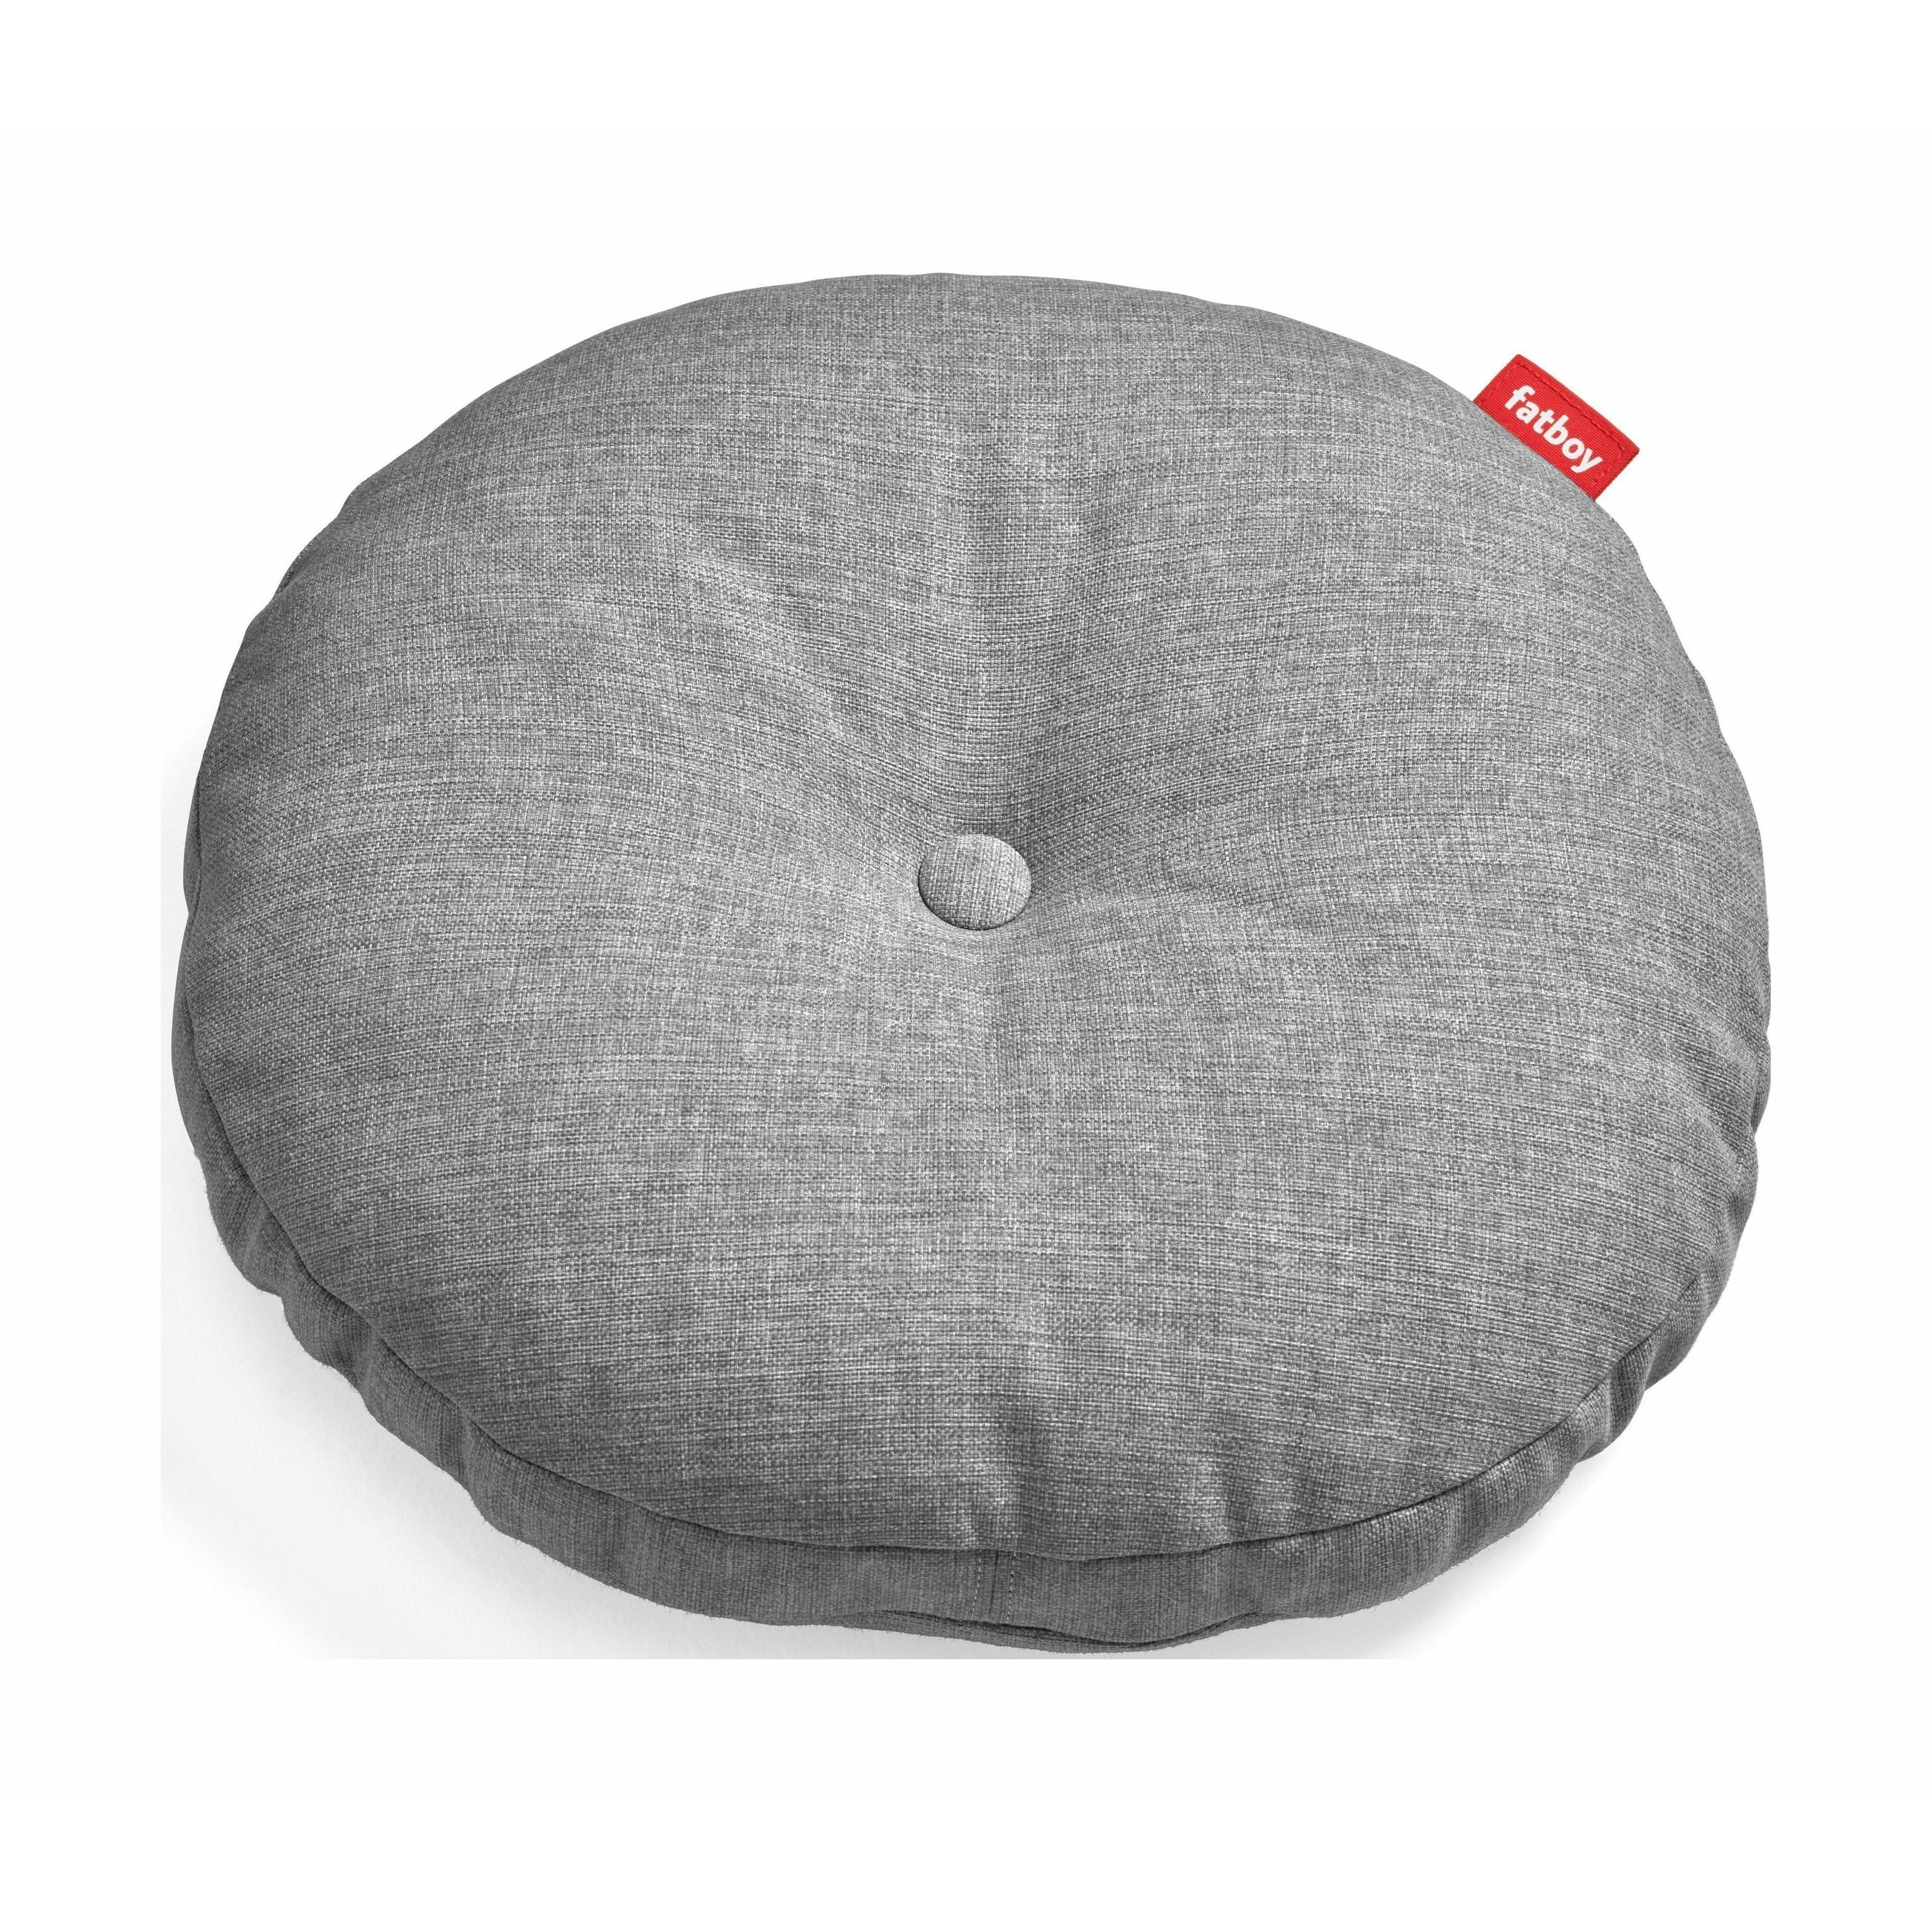 Fatboy Circle Pillow Outdoor Round Round Garden Cushion, Stone Gray